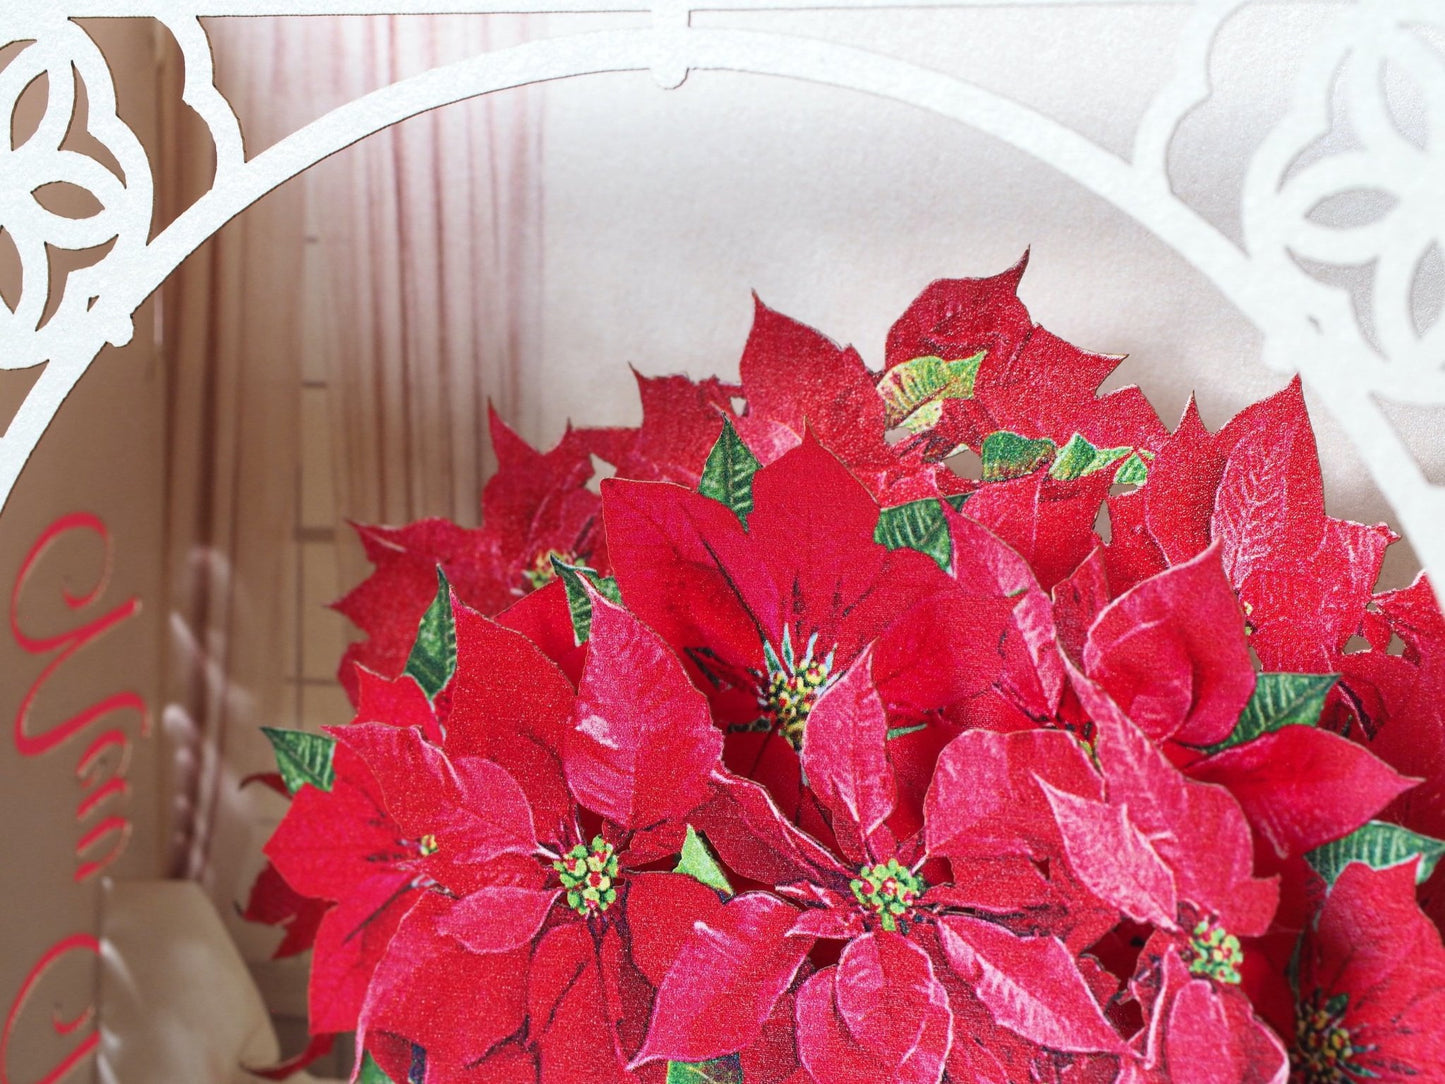 Poinsettia bouquet paper pop up 3d laser cut model. Christmas card with flowers miniature. - ColibriGift